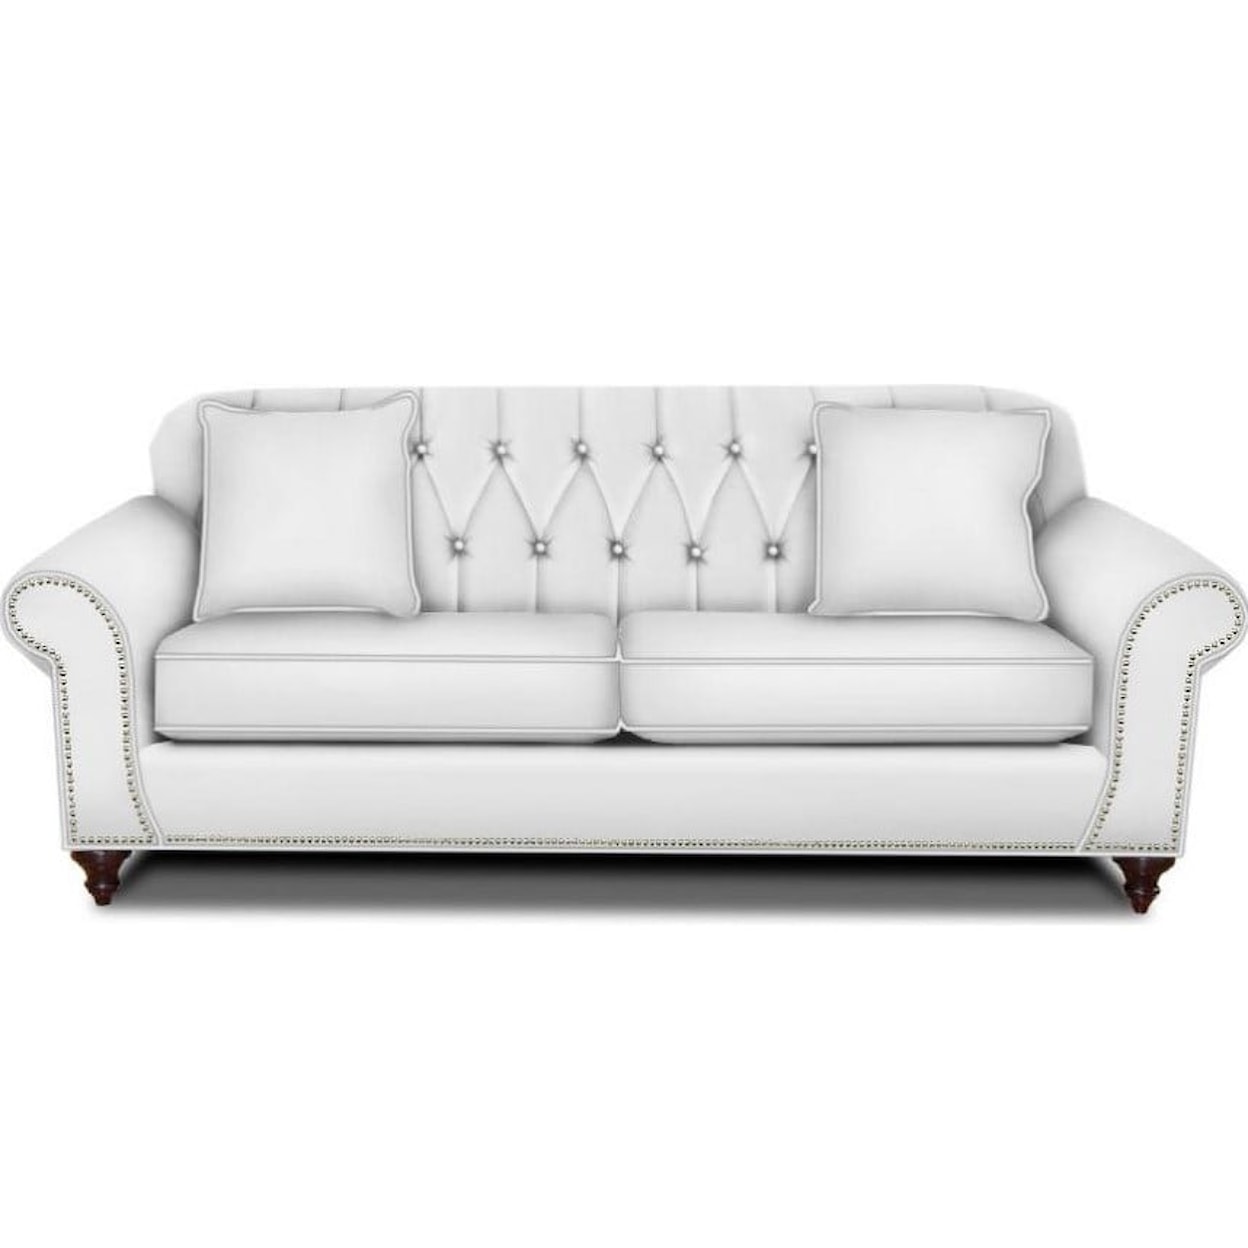 Dimensions 5730/N Series Sofa with Nailheads